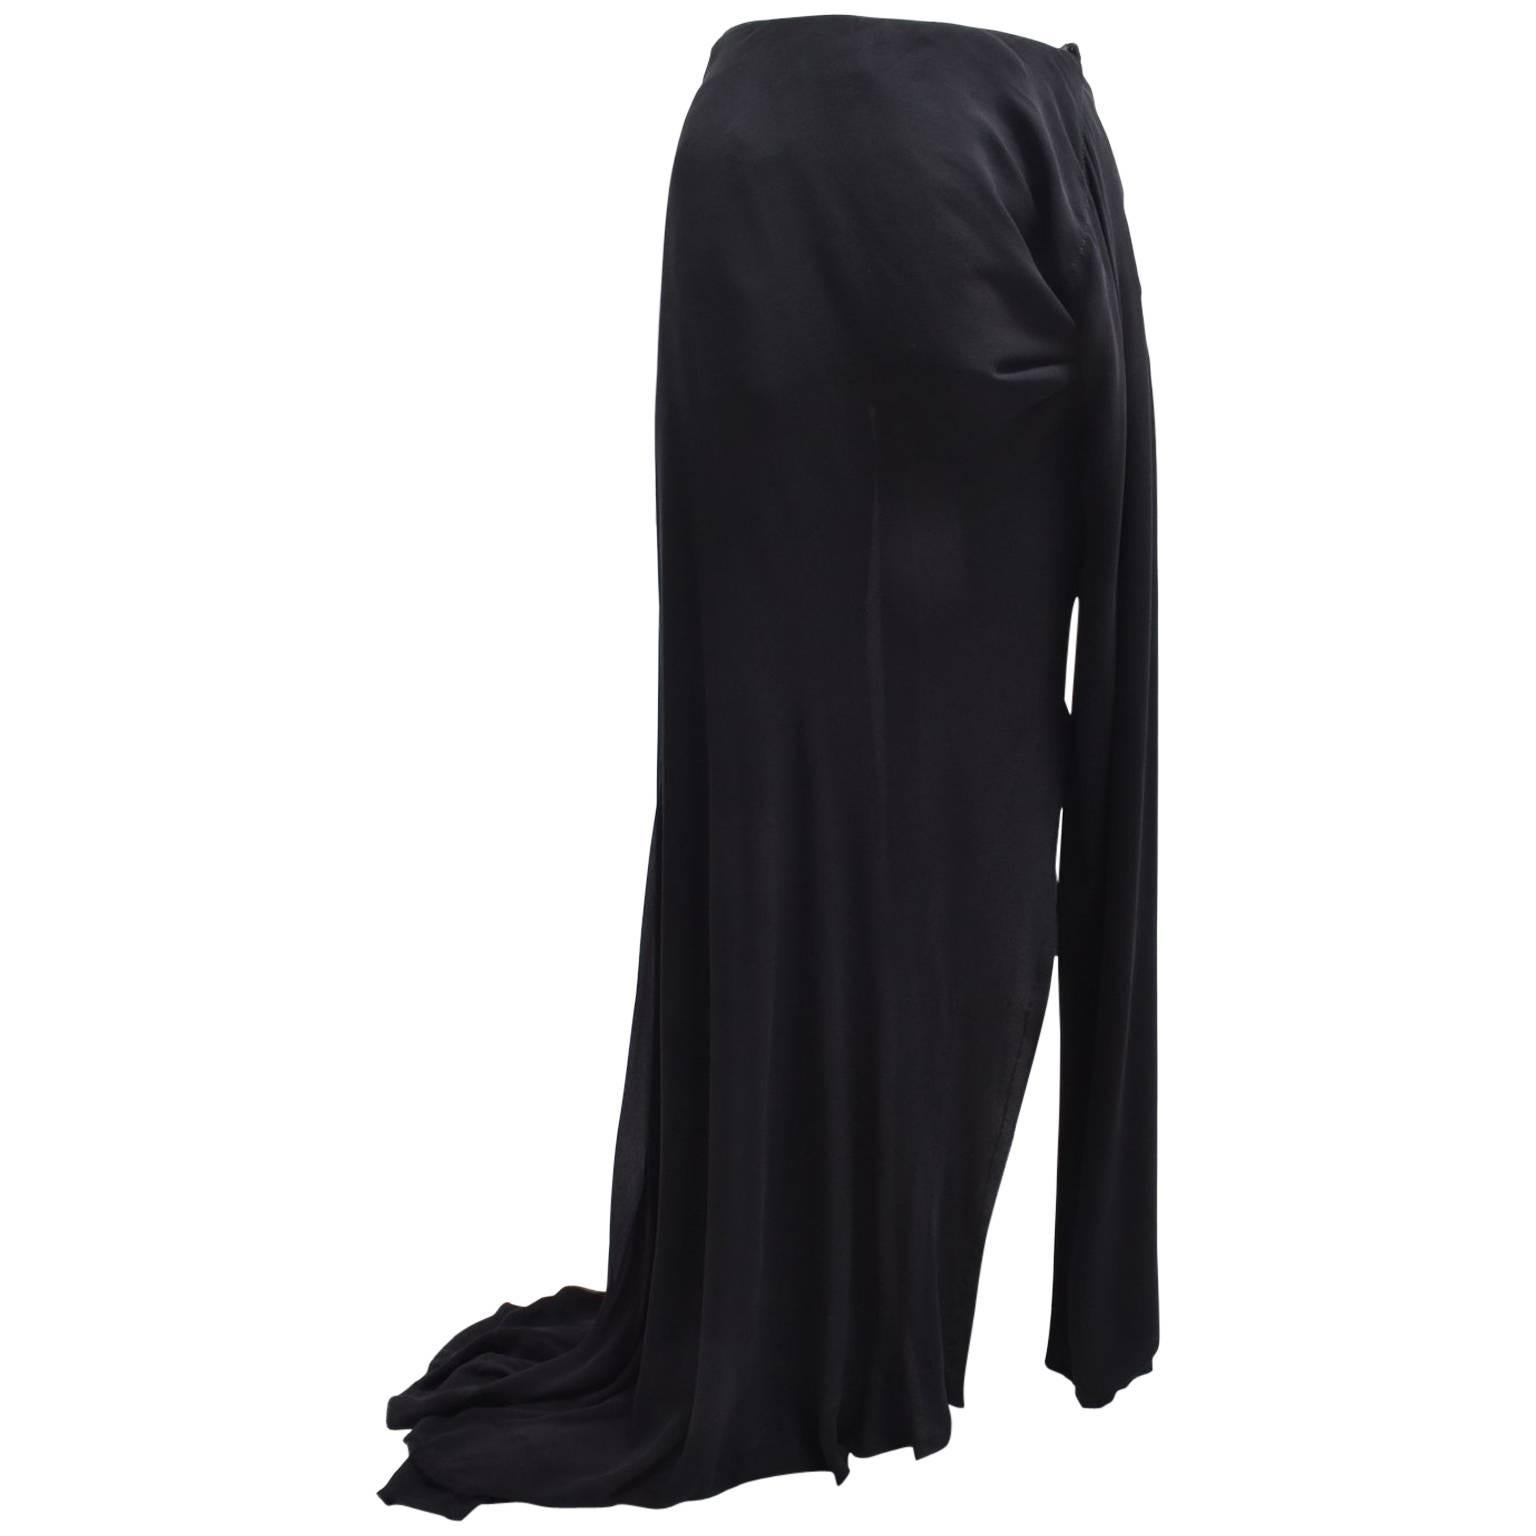 Vivienne Westwood ‘Acorn’ Black Asymmetric Skirt with Side Knot and Slit Details For Sale